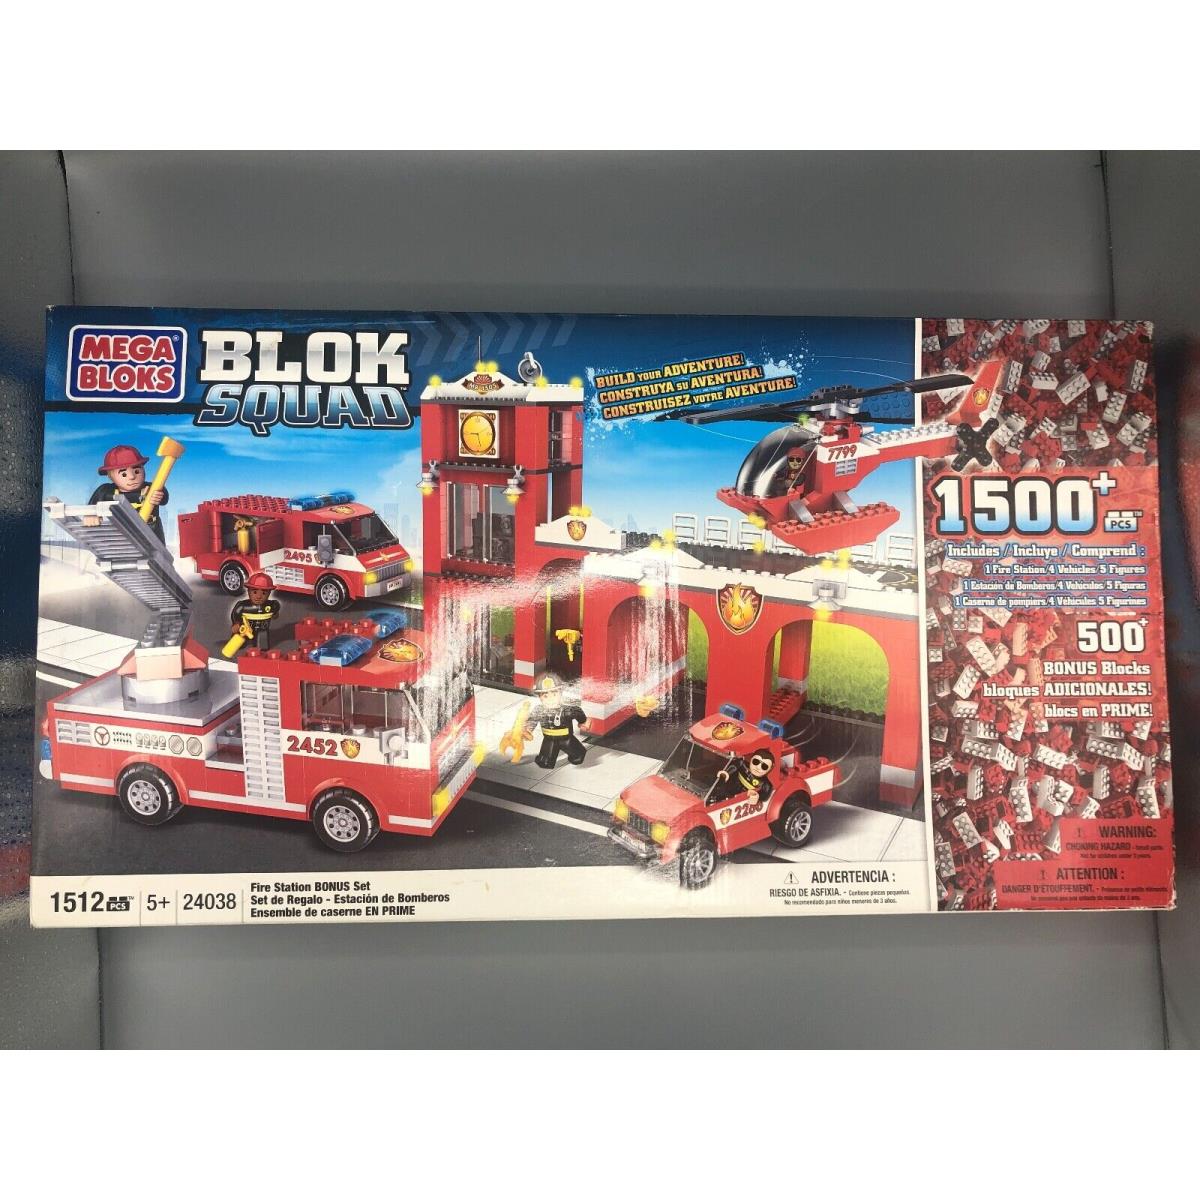 Mega Bloks Blok Squad 24038 Fire Station Fire Truck Copter 1500+Pc